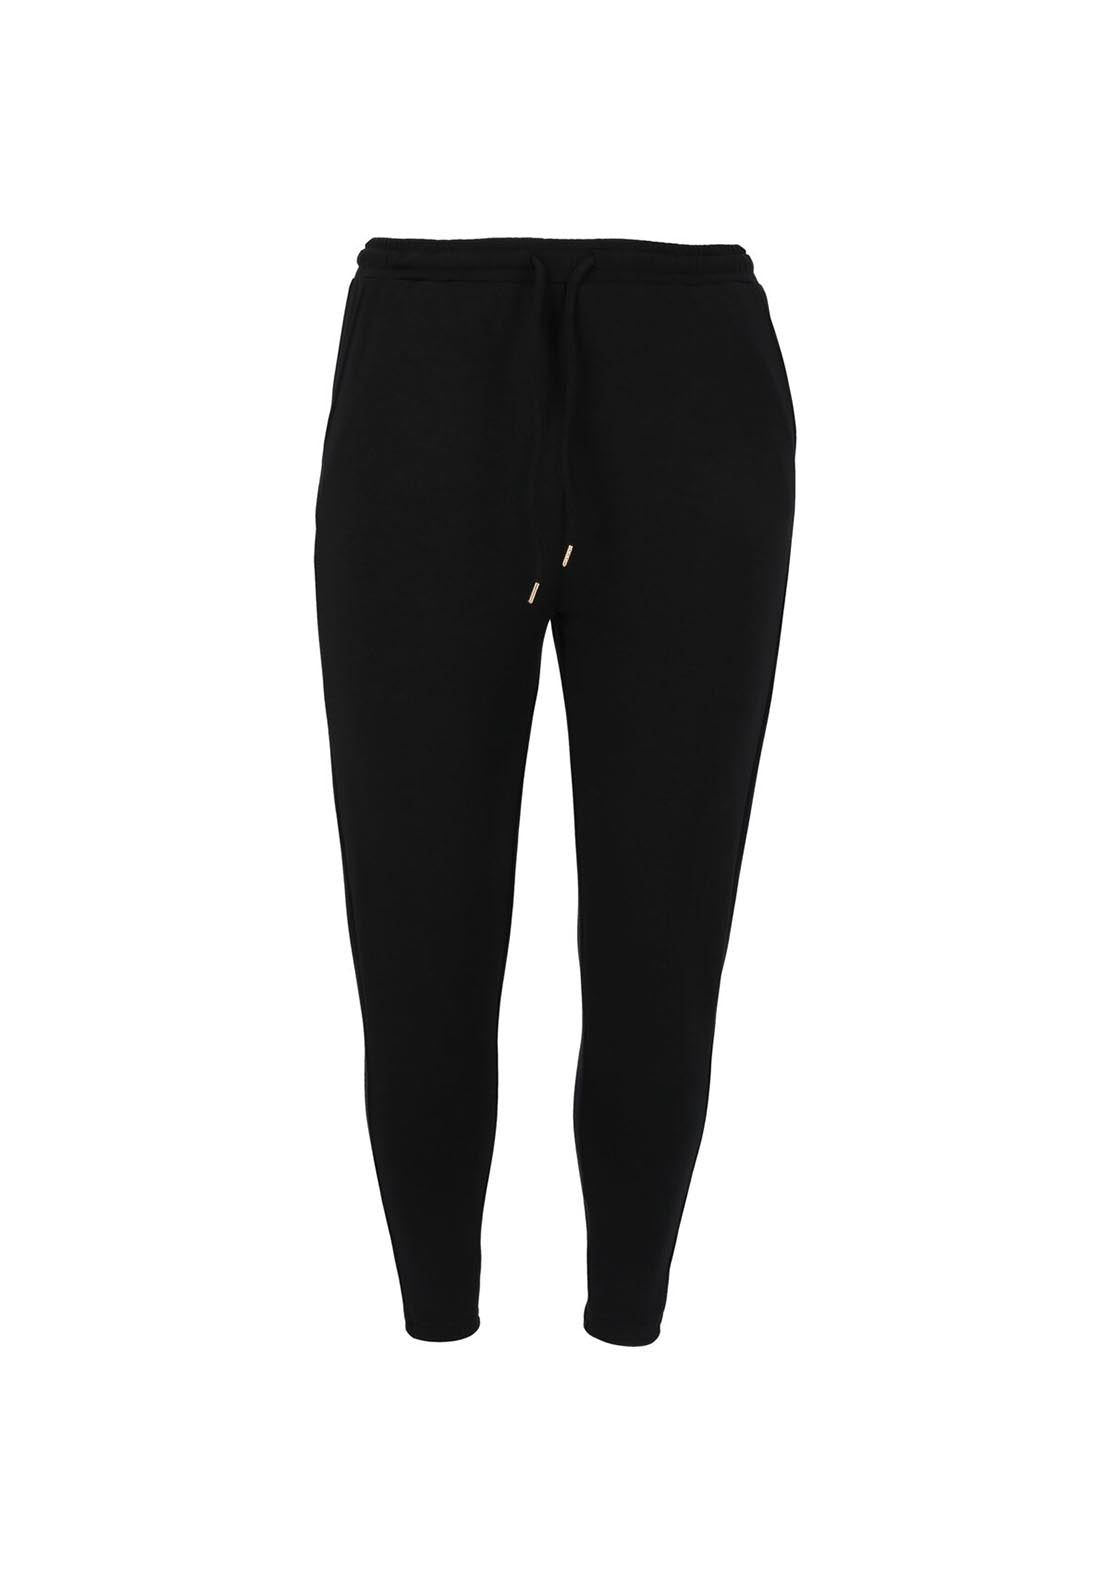 Q Tiamo Womens Sweat Pants - Black 7 Shaws Department Stores